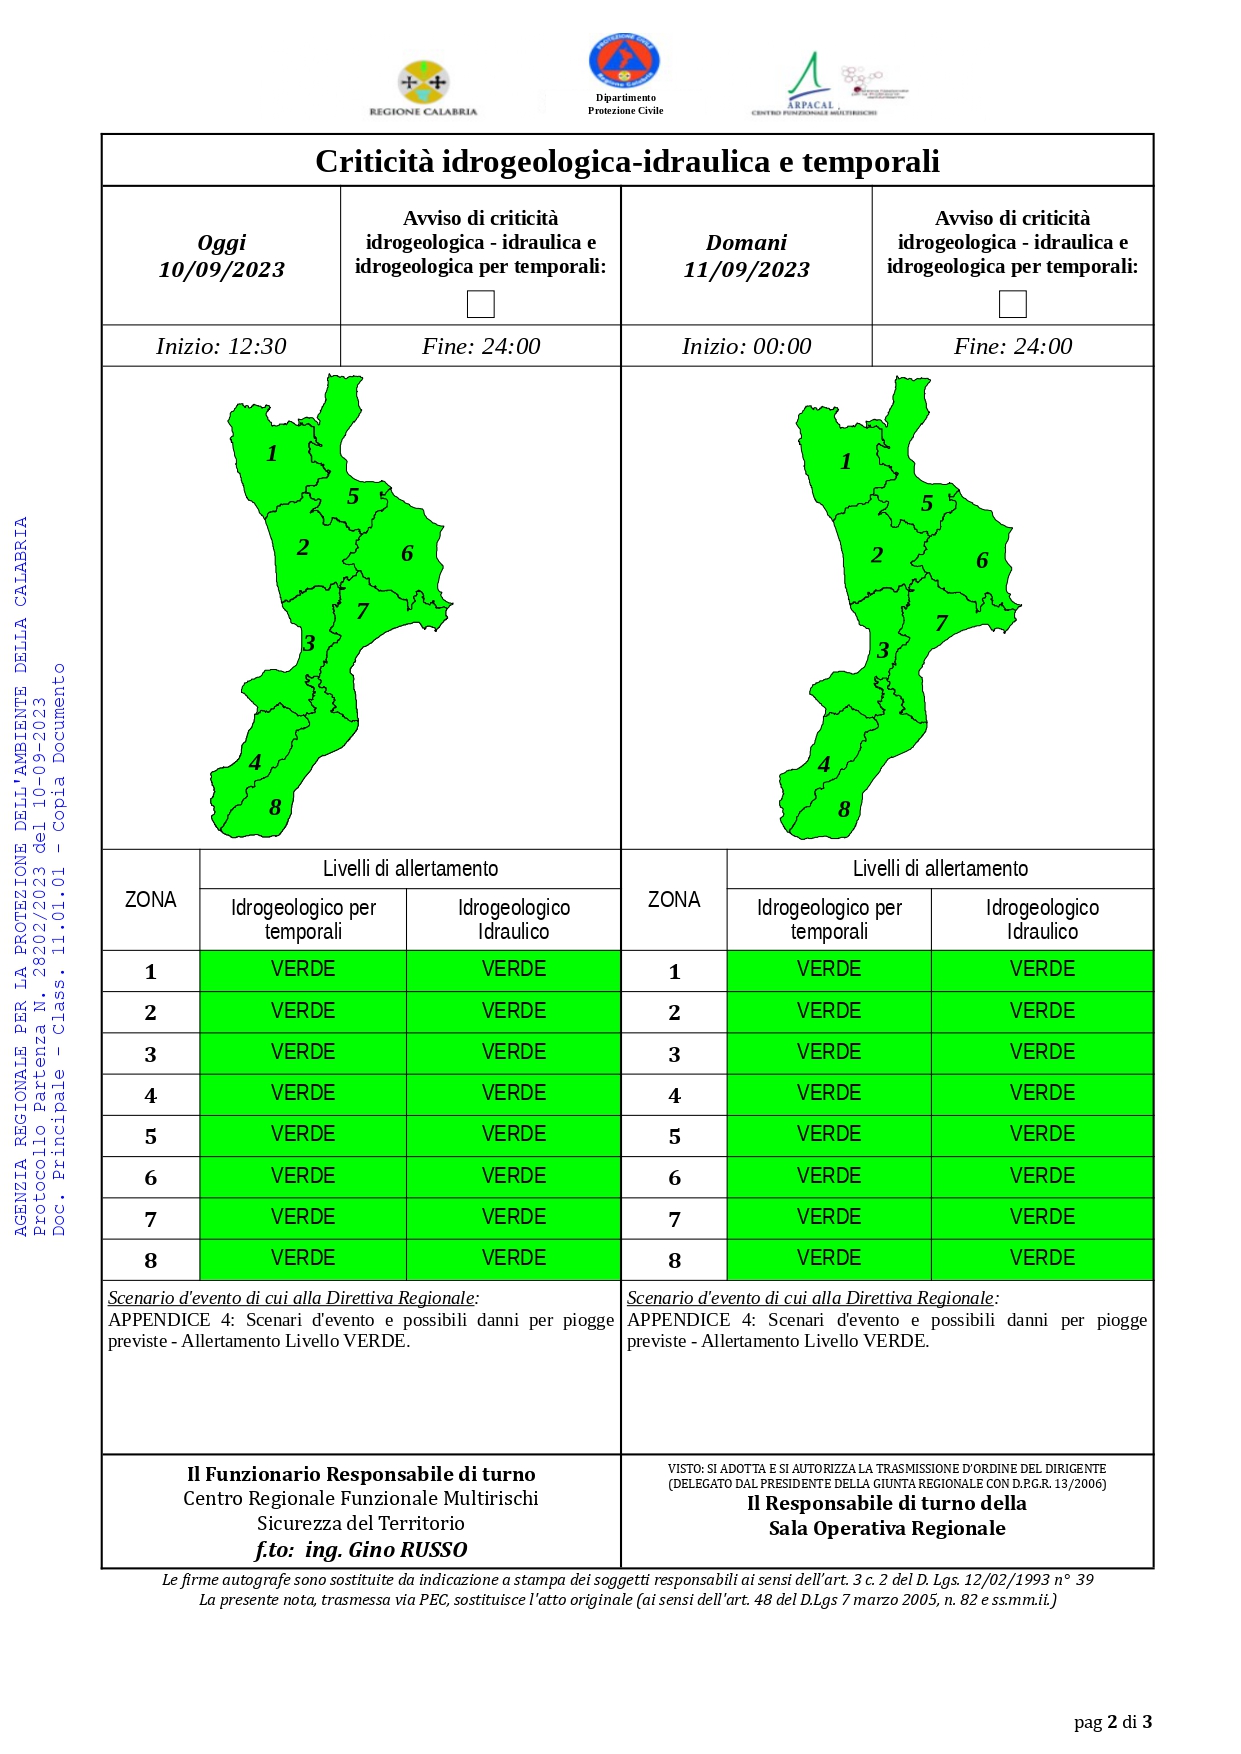 Criticità idrogeologica-idraulica e temporali in Calabria 10-09-2023